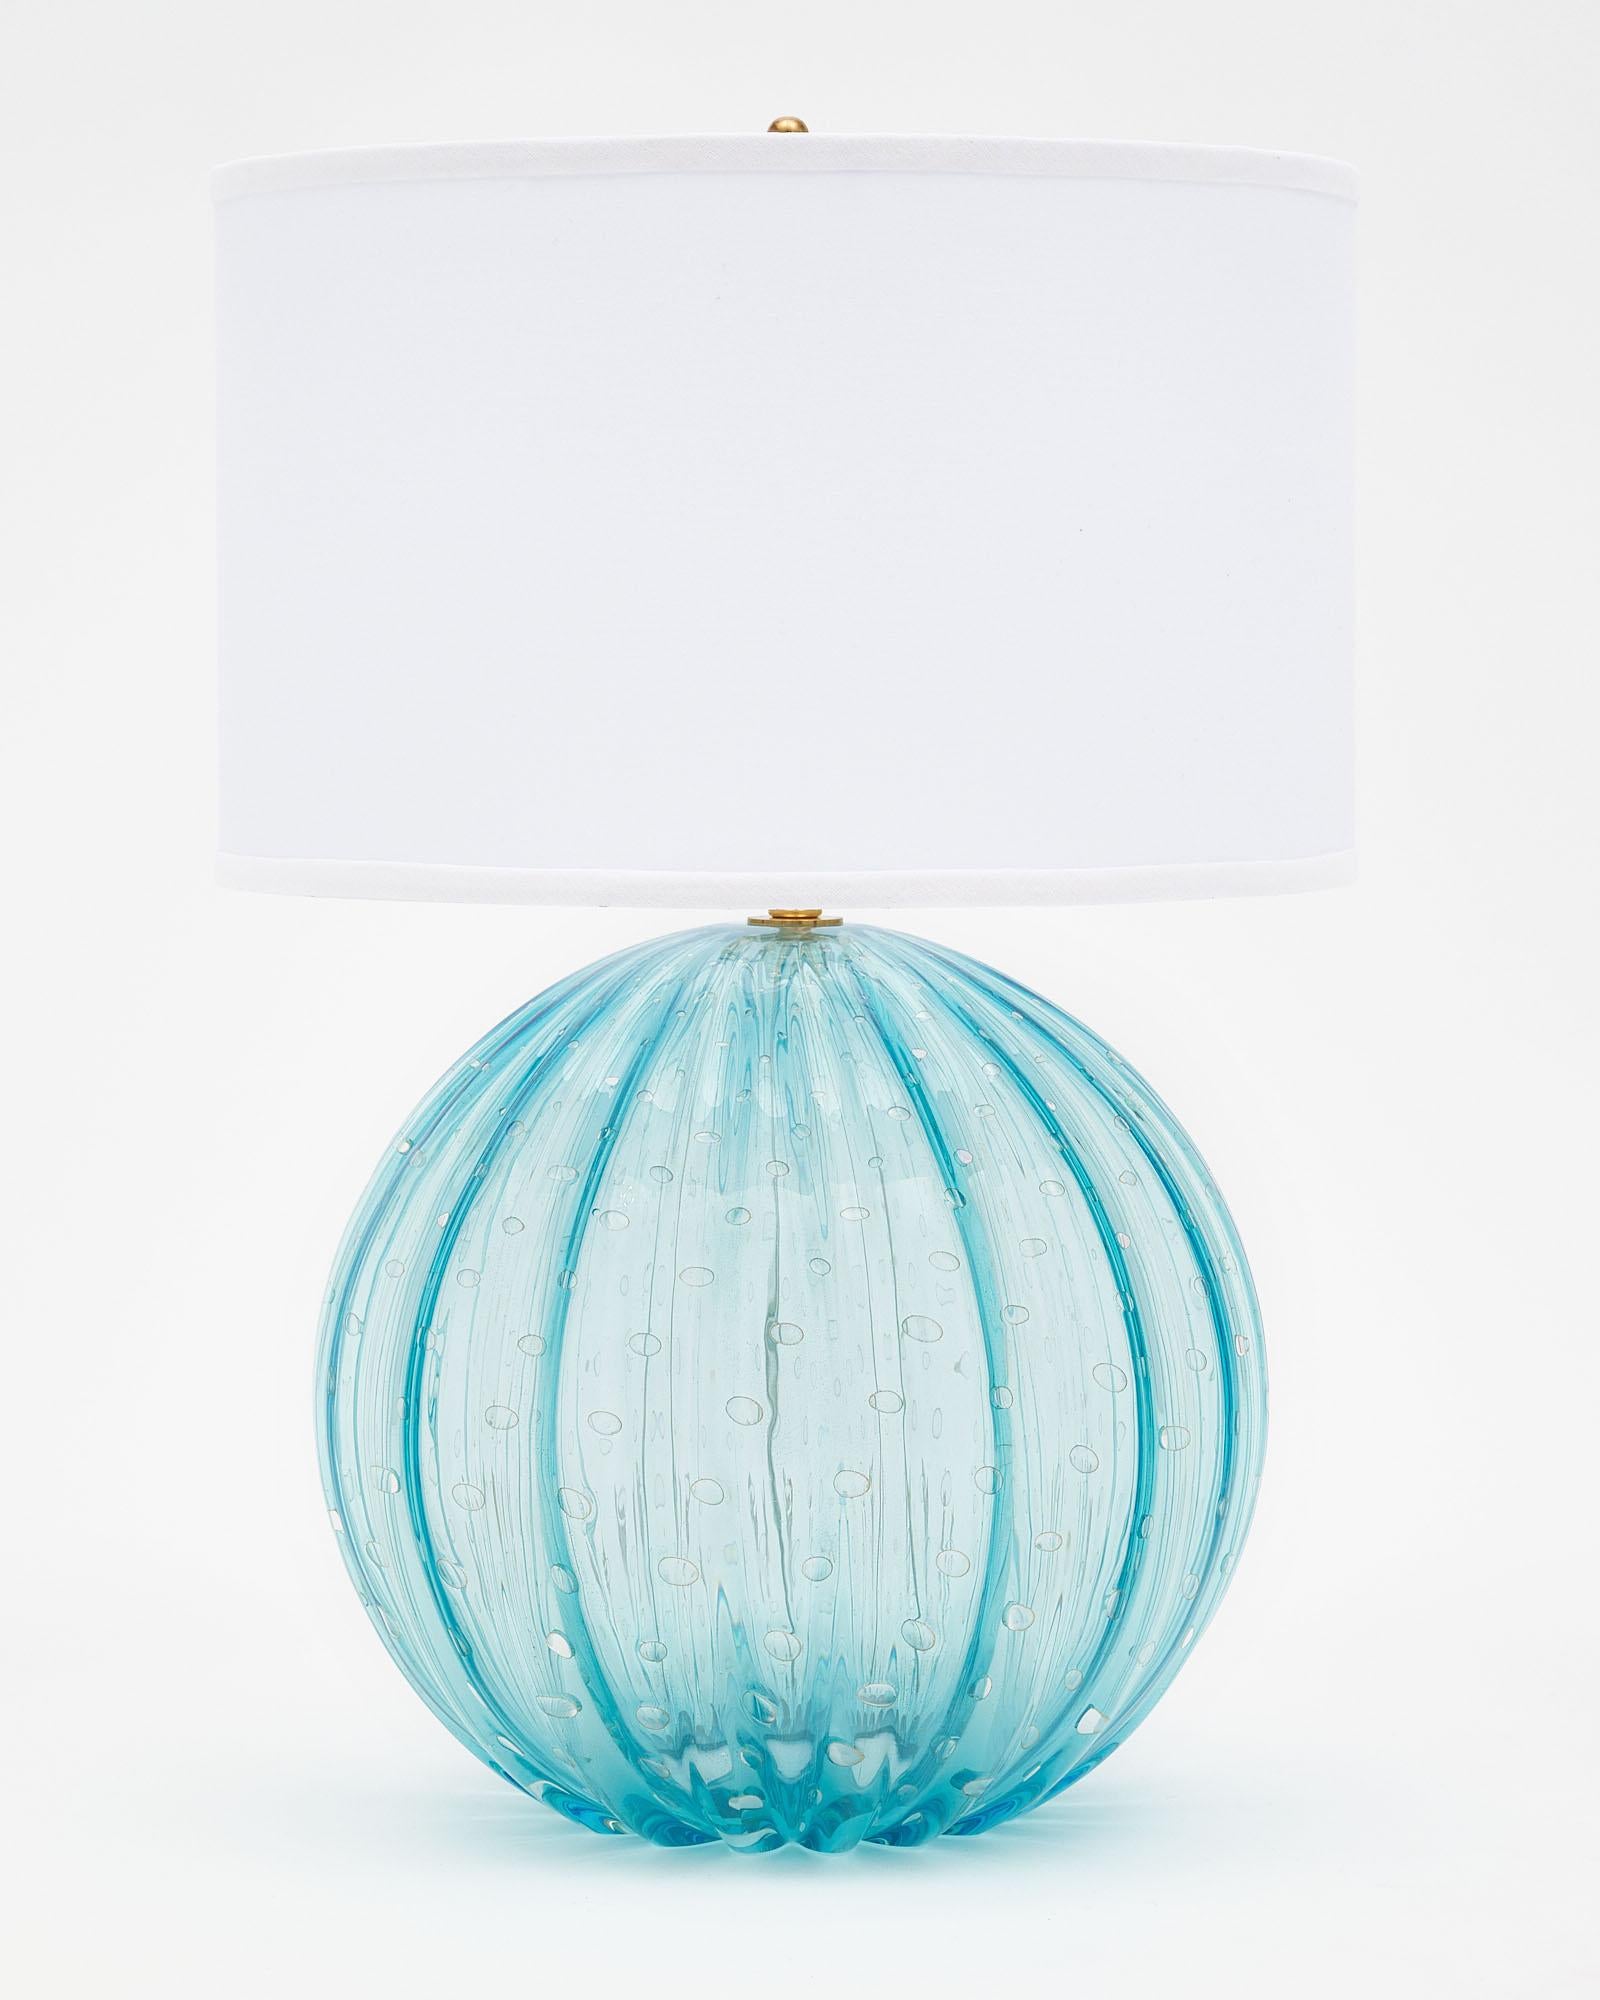 Stunning pair of aqua blue Murano glass table lamps with 23-karat 